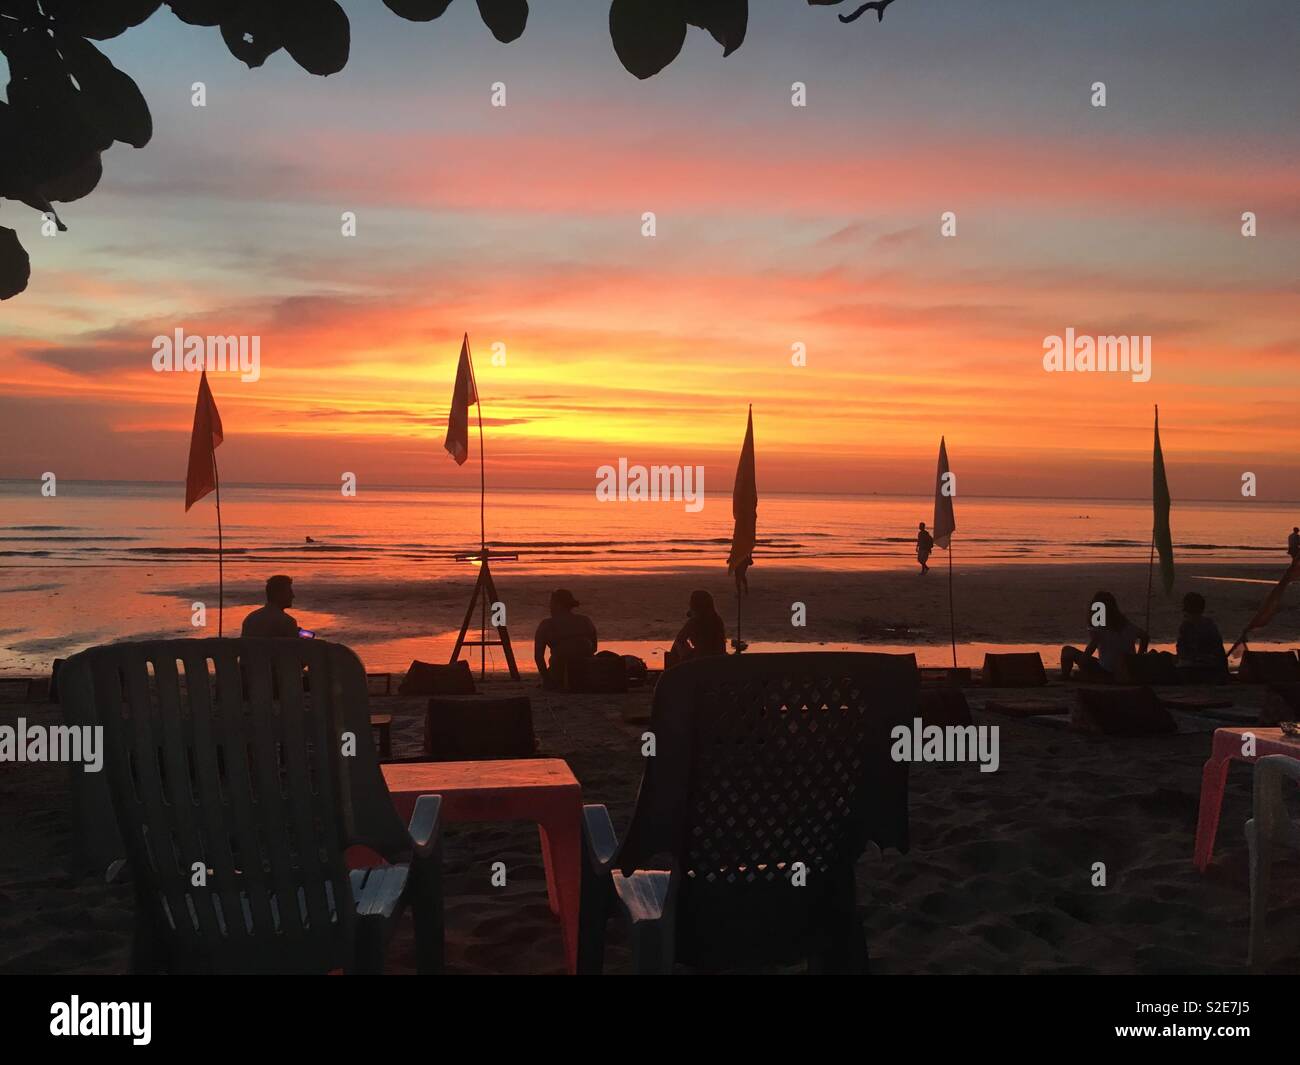 Sunset on the beach in Thailand beach bar and flags Stock Photo